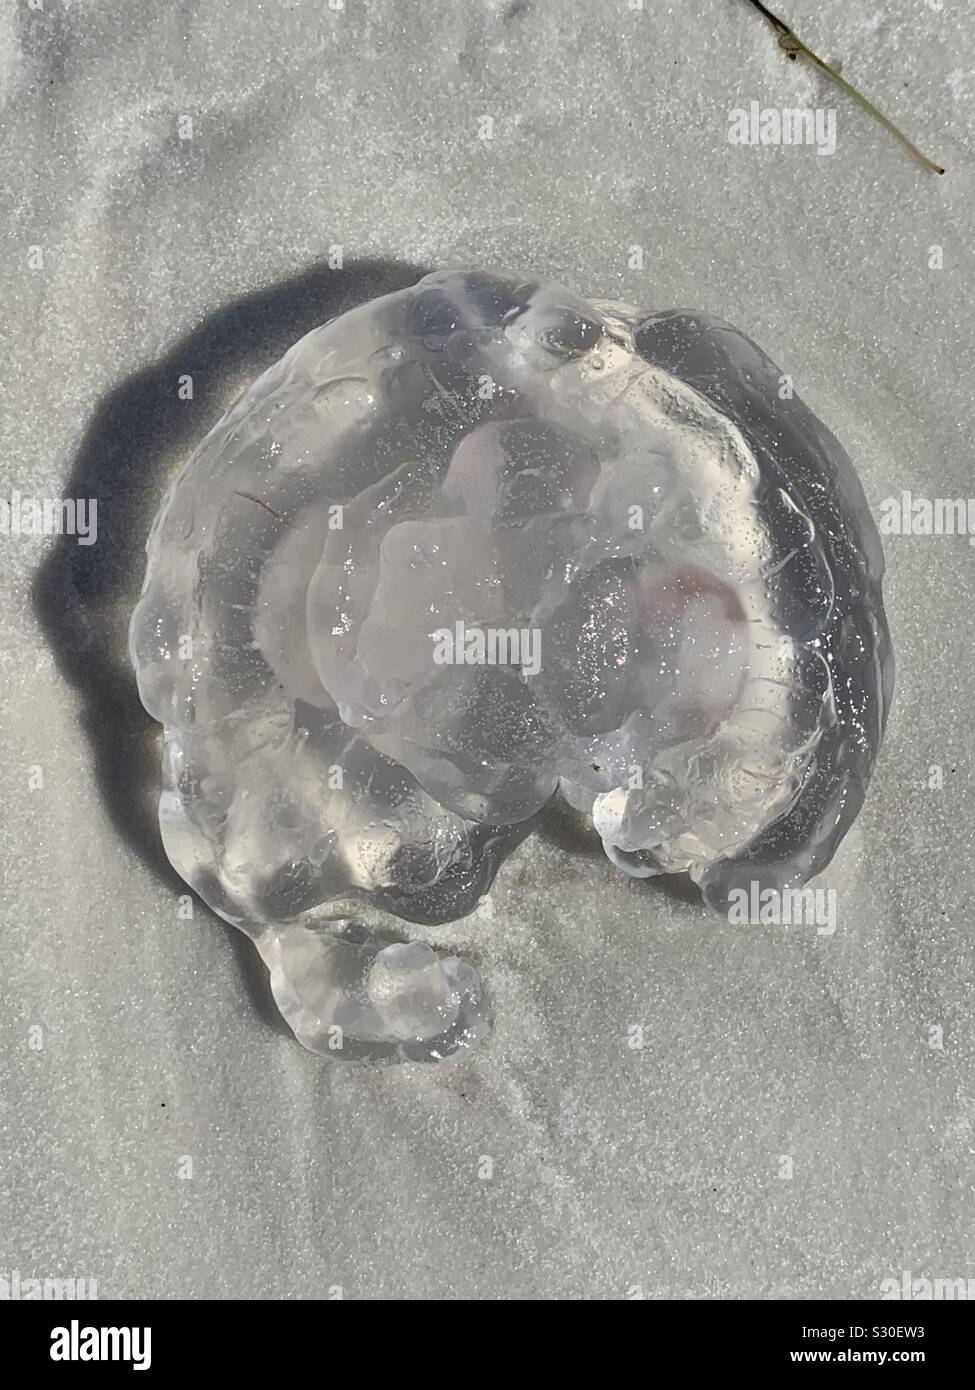 Crystal jellyfish on beach sand Stock Photo